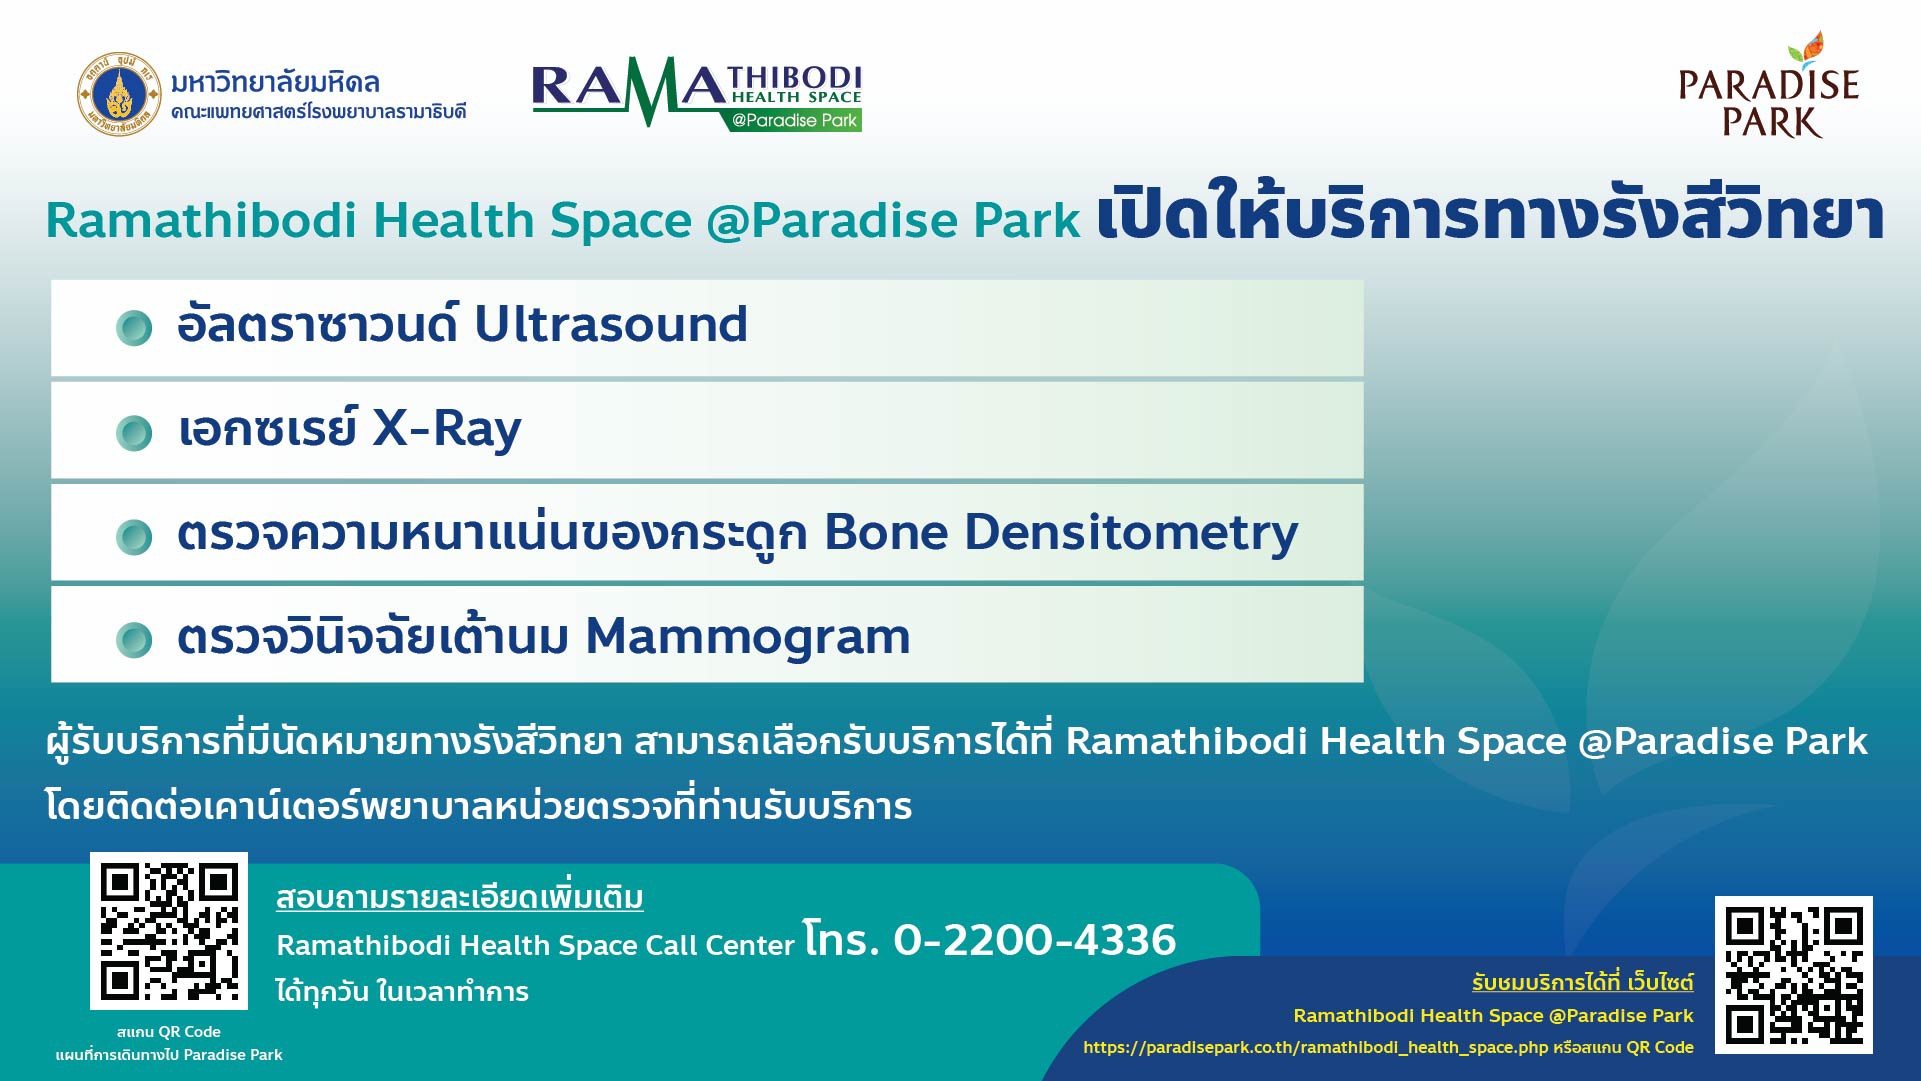 Ramathibodi Health Space @Paradise Park เปิดให้บริการทางรังสีวิทยา